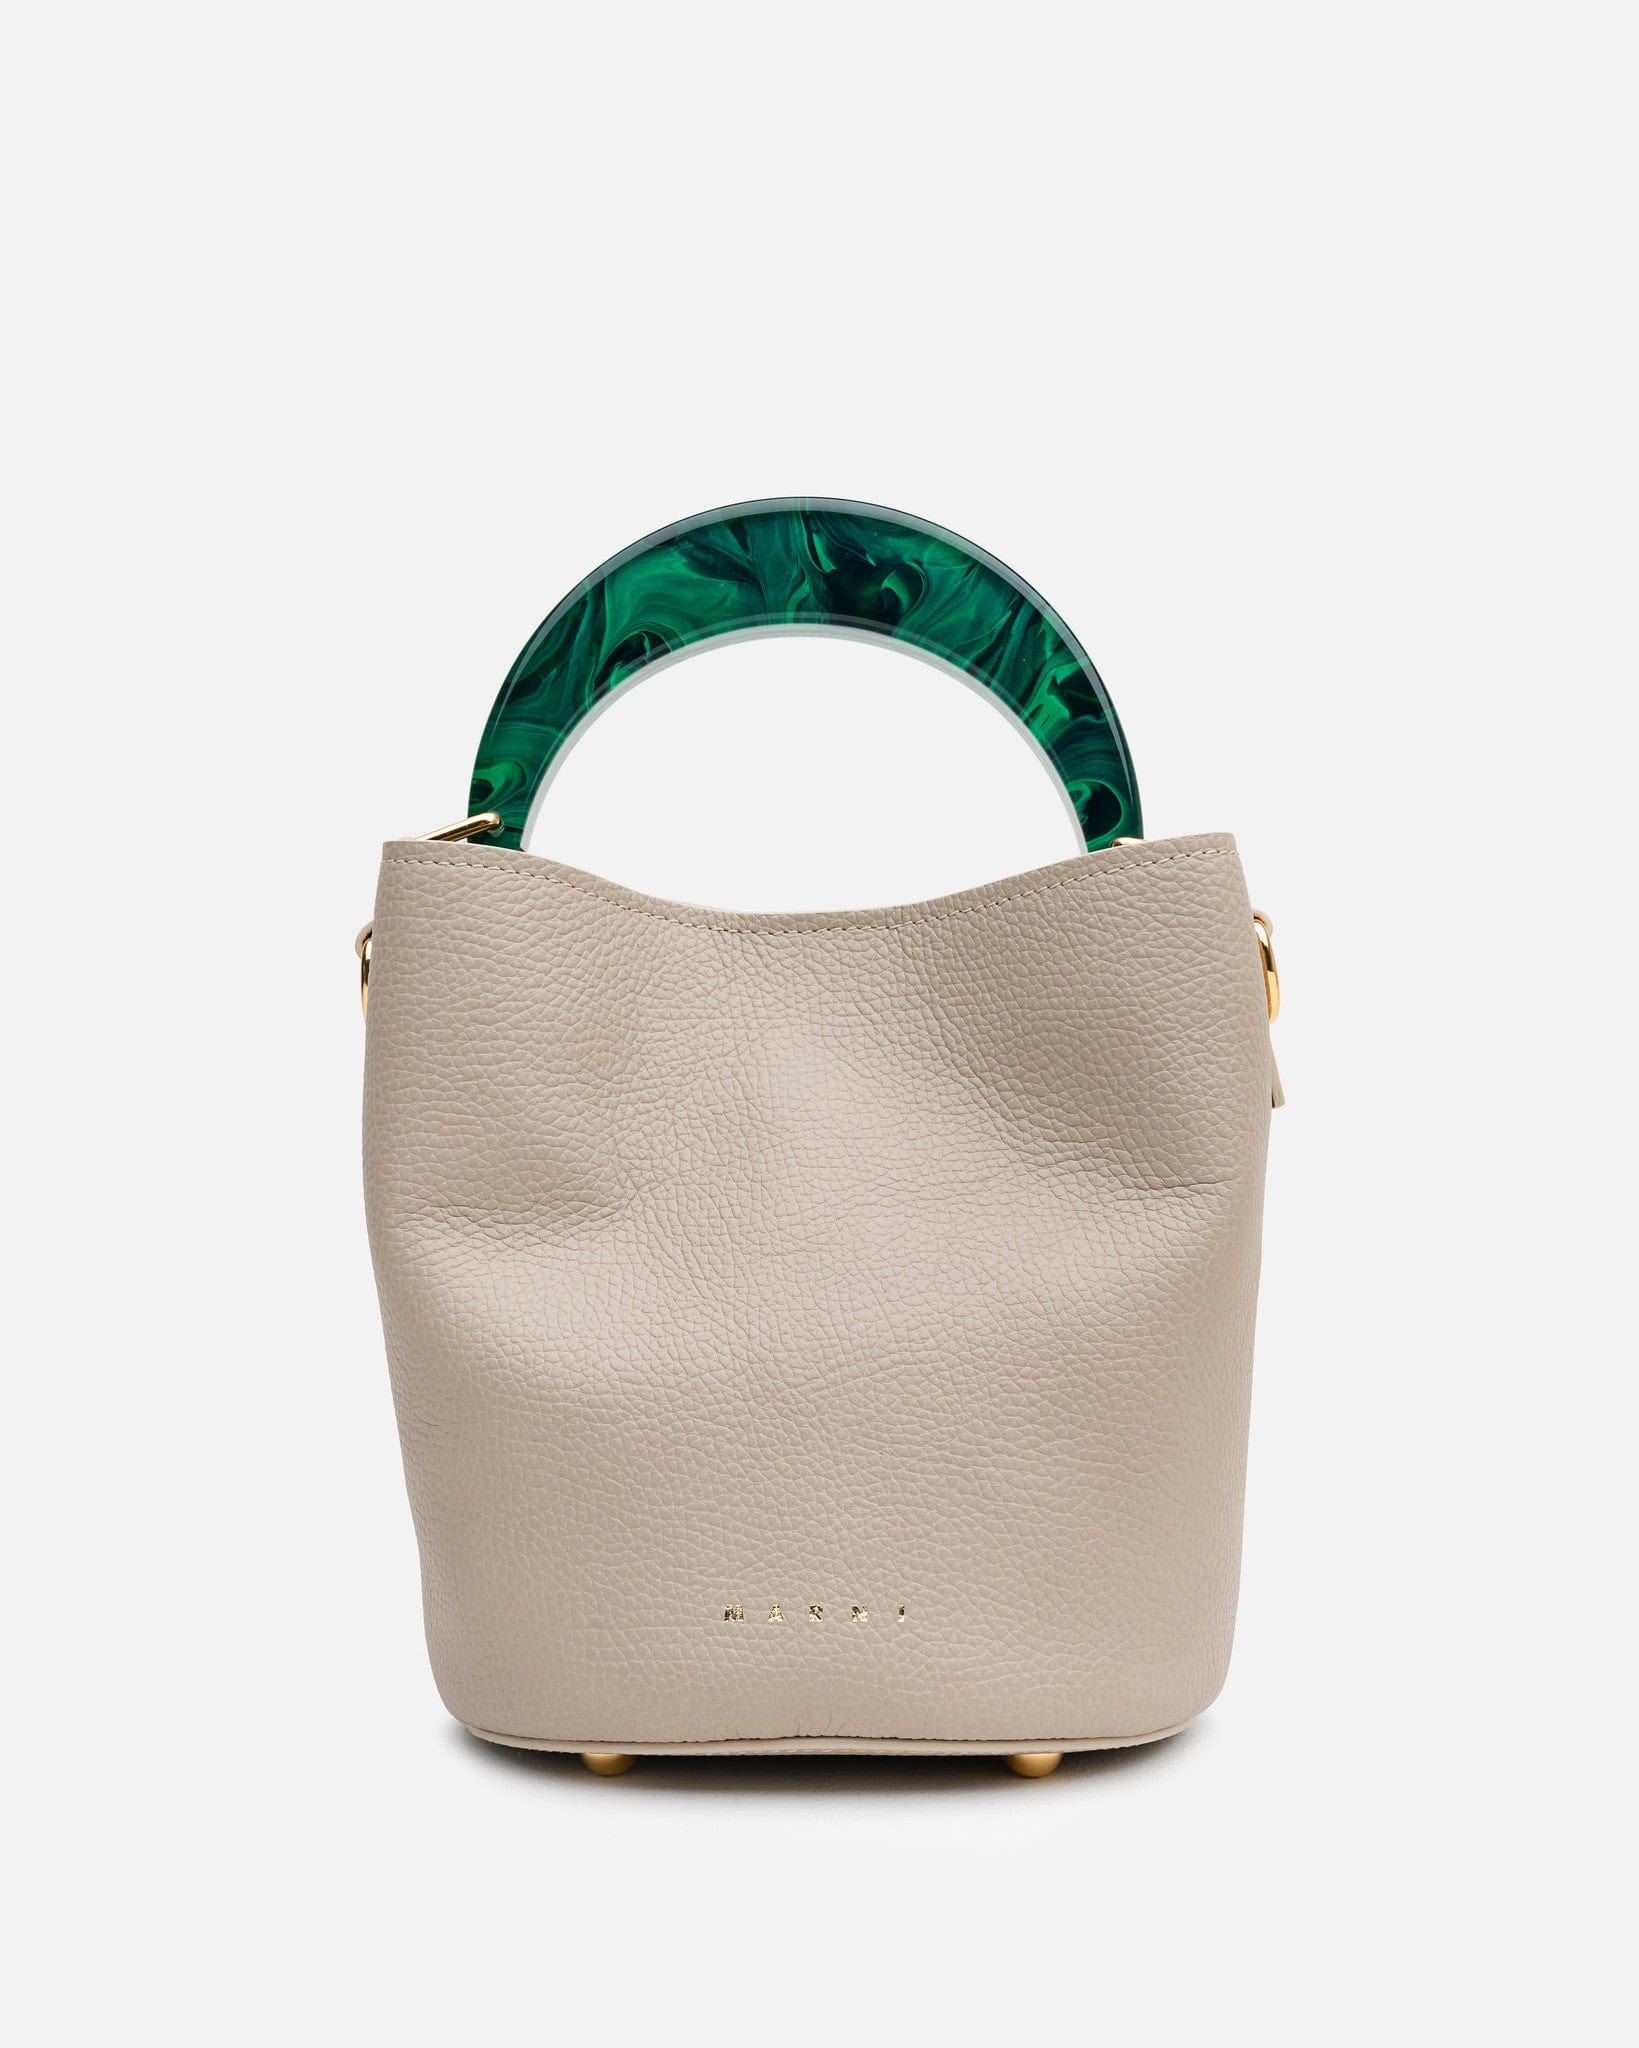 Marni Women Bags Venice Bucket Bag in Light Camel/Spherical Green